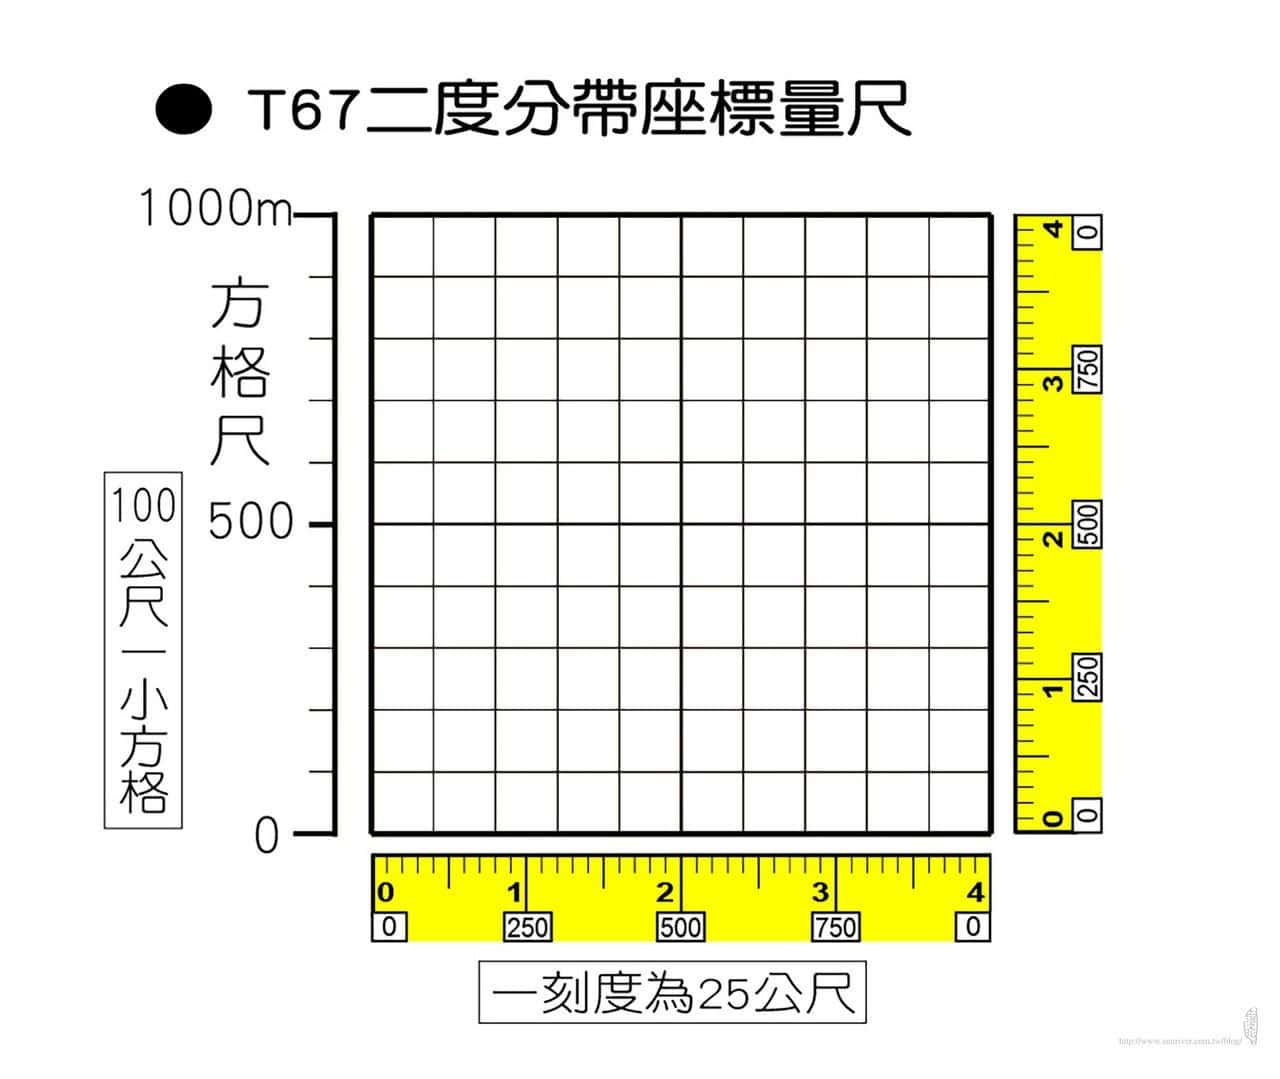 T67二度分帶座標量尺分析 地圖裡附的是黃色的量尺，每一刻度為25公尺。 